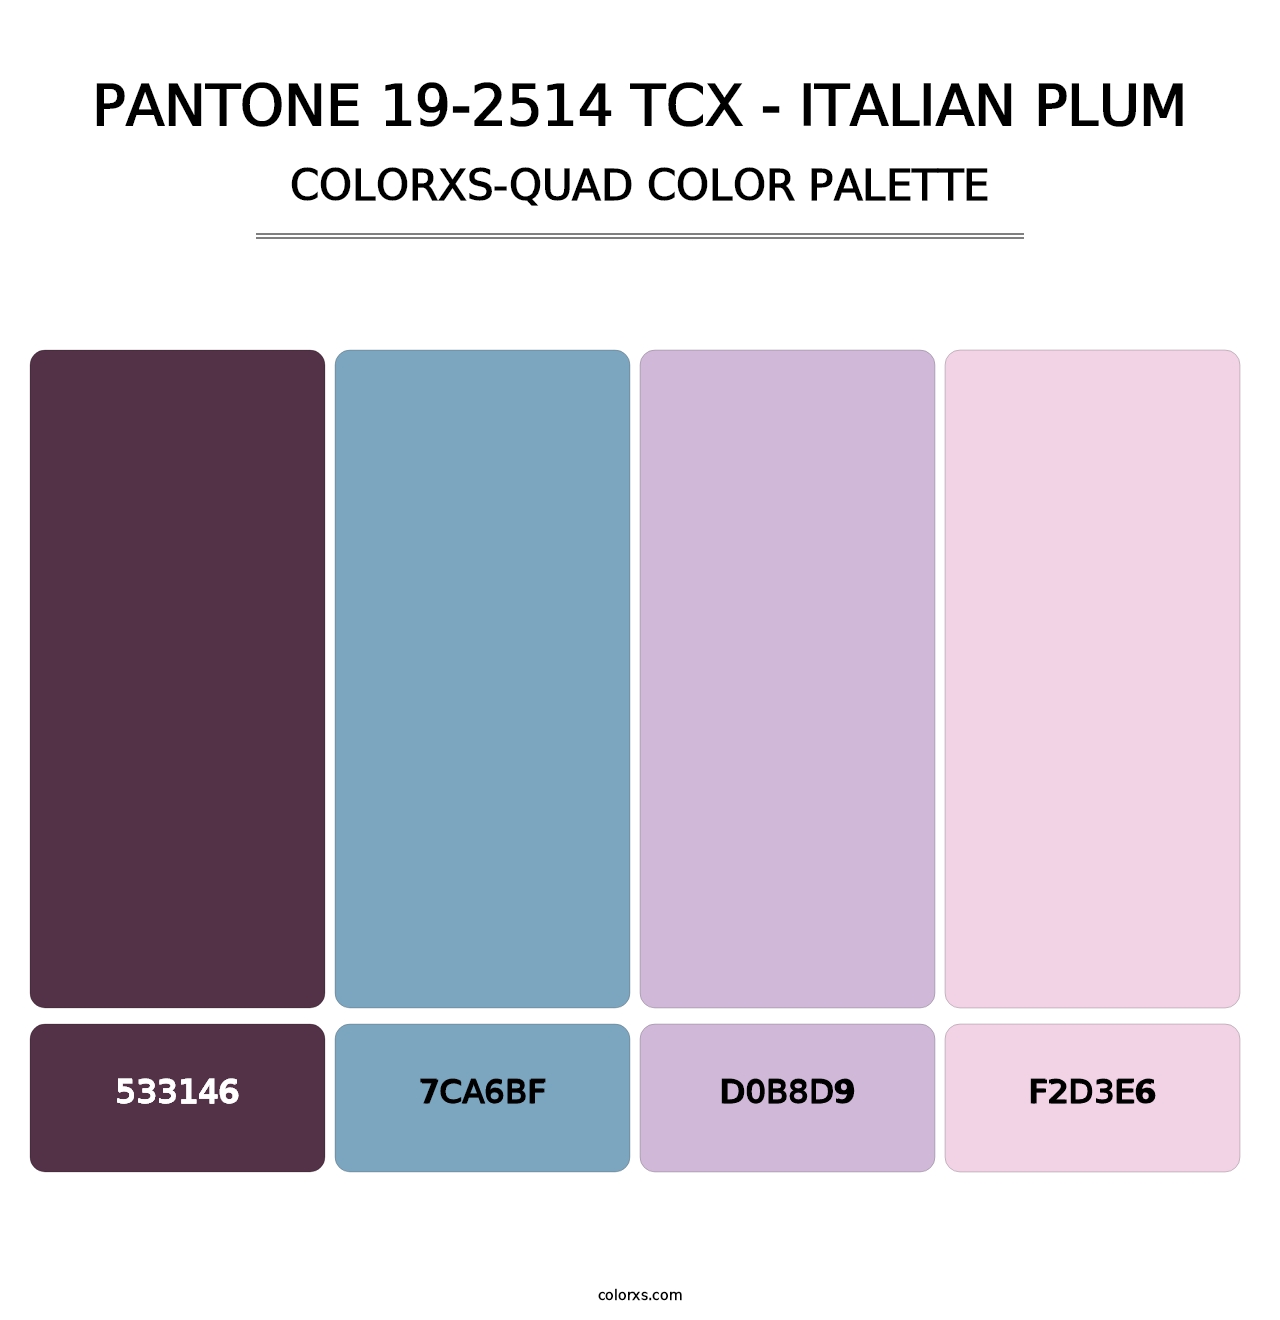 PANTONE 19-2514 TCX - Italian Plum - Colorxs Quad Palette